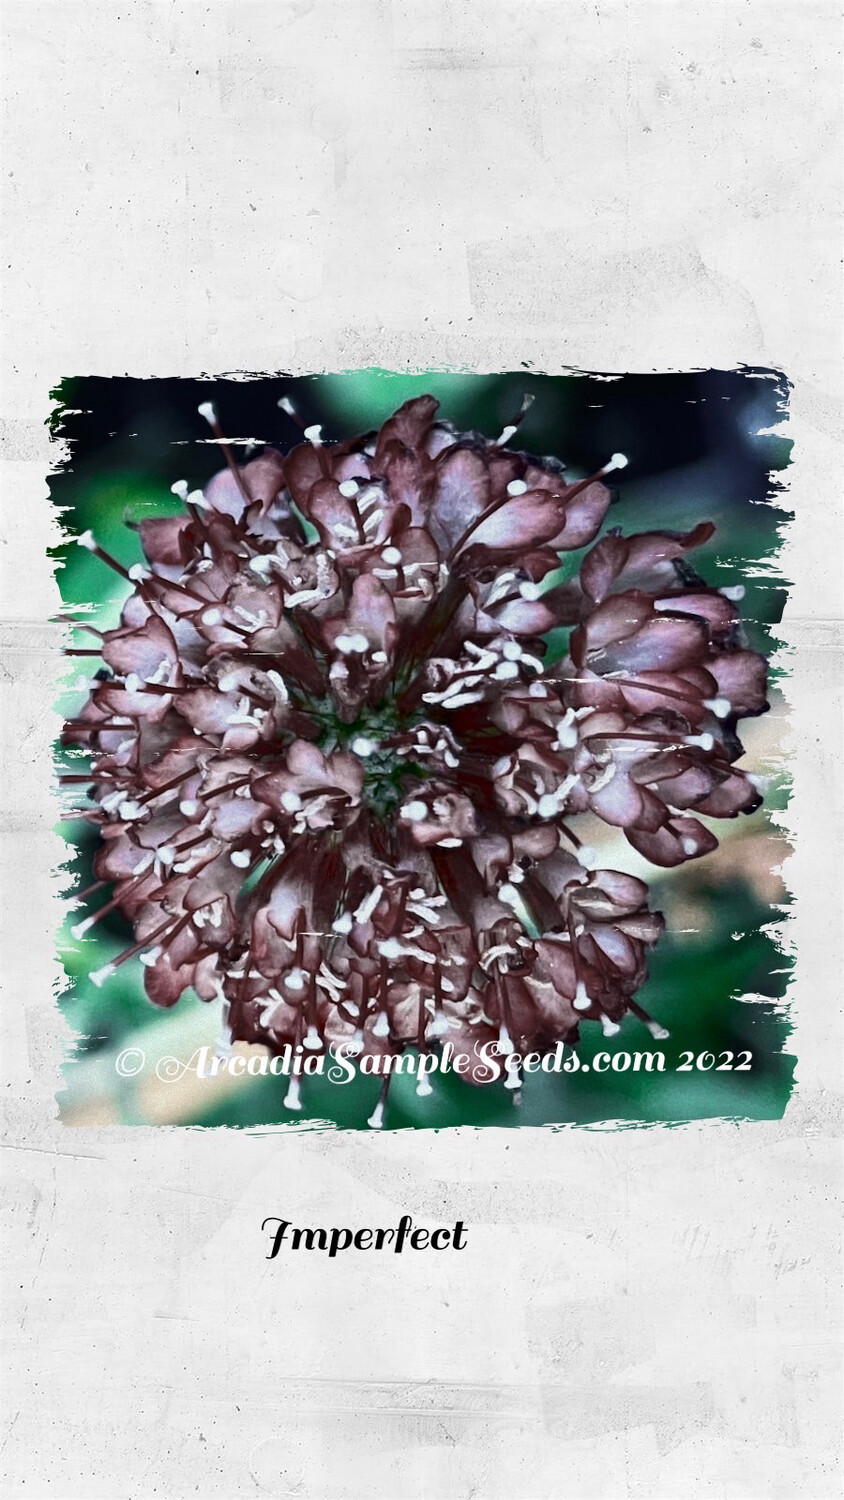 Pincushion Flower 'Black Knight' Mourningbride
(Scabiosa Atropurpurea)